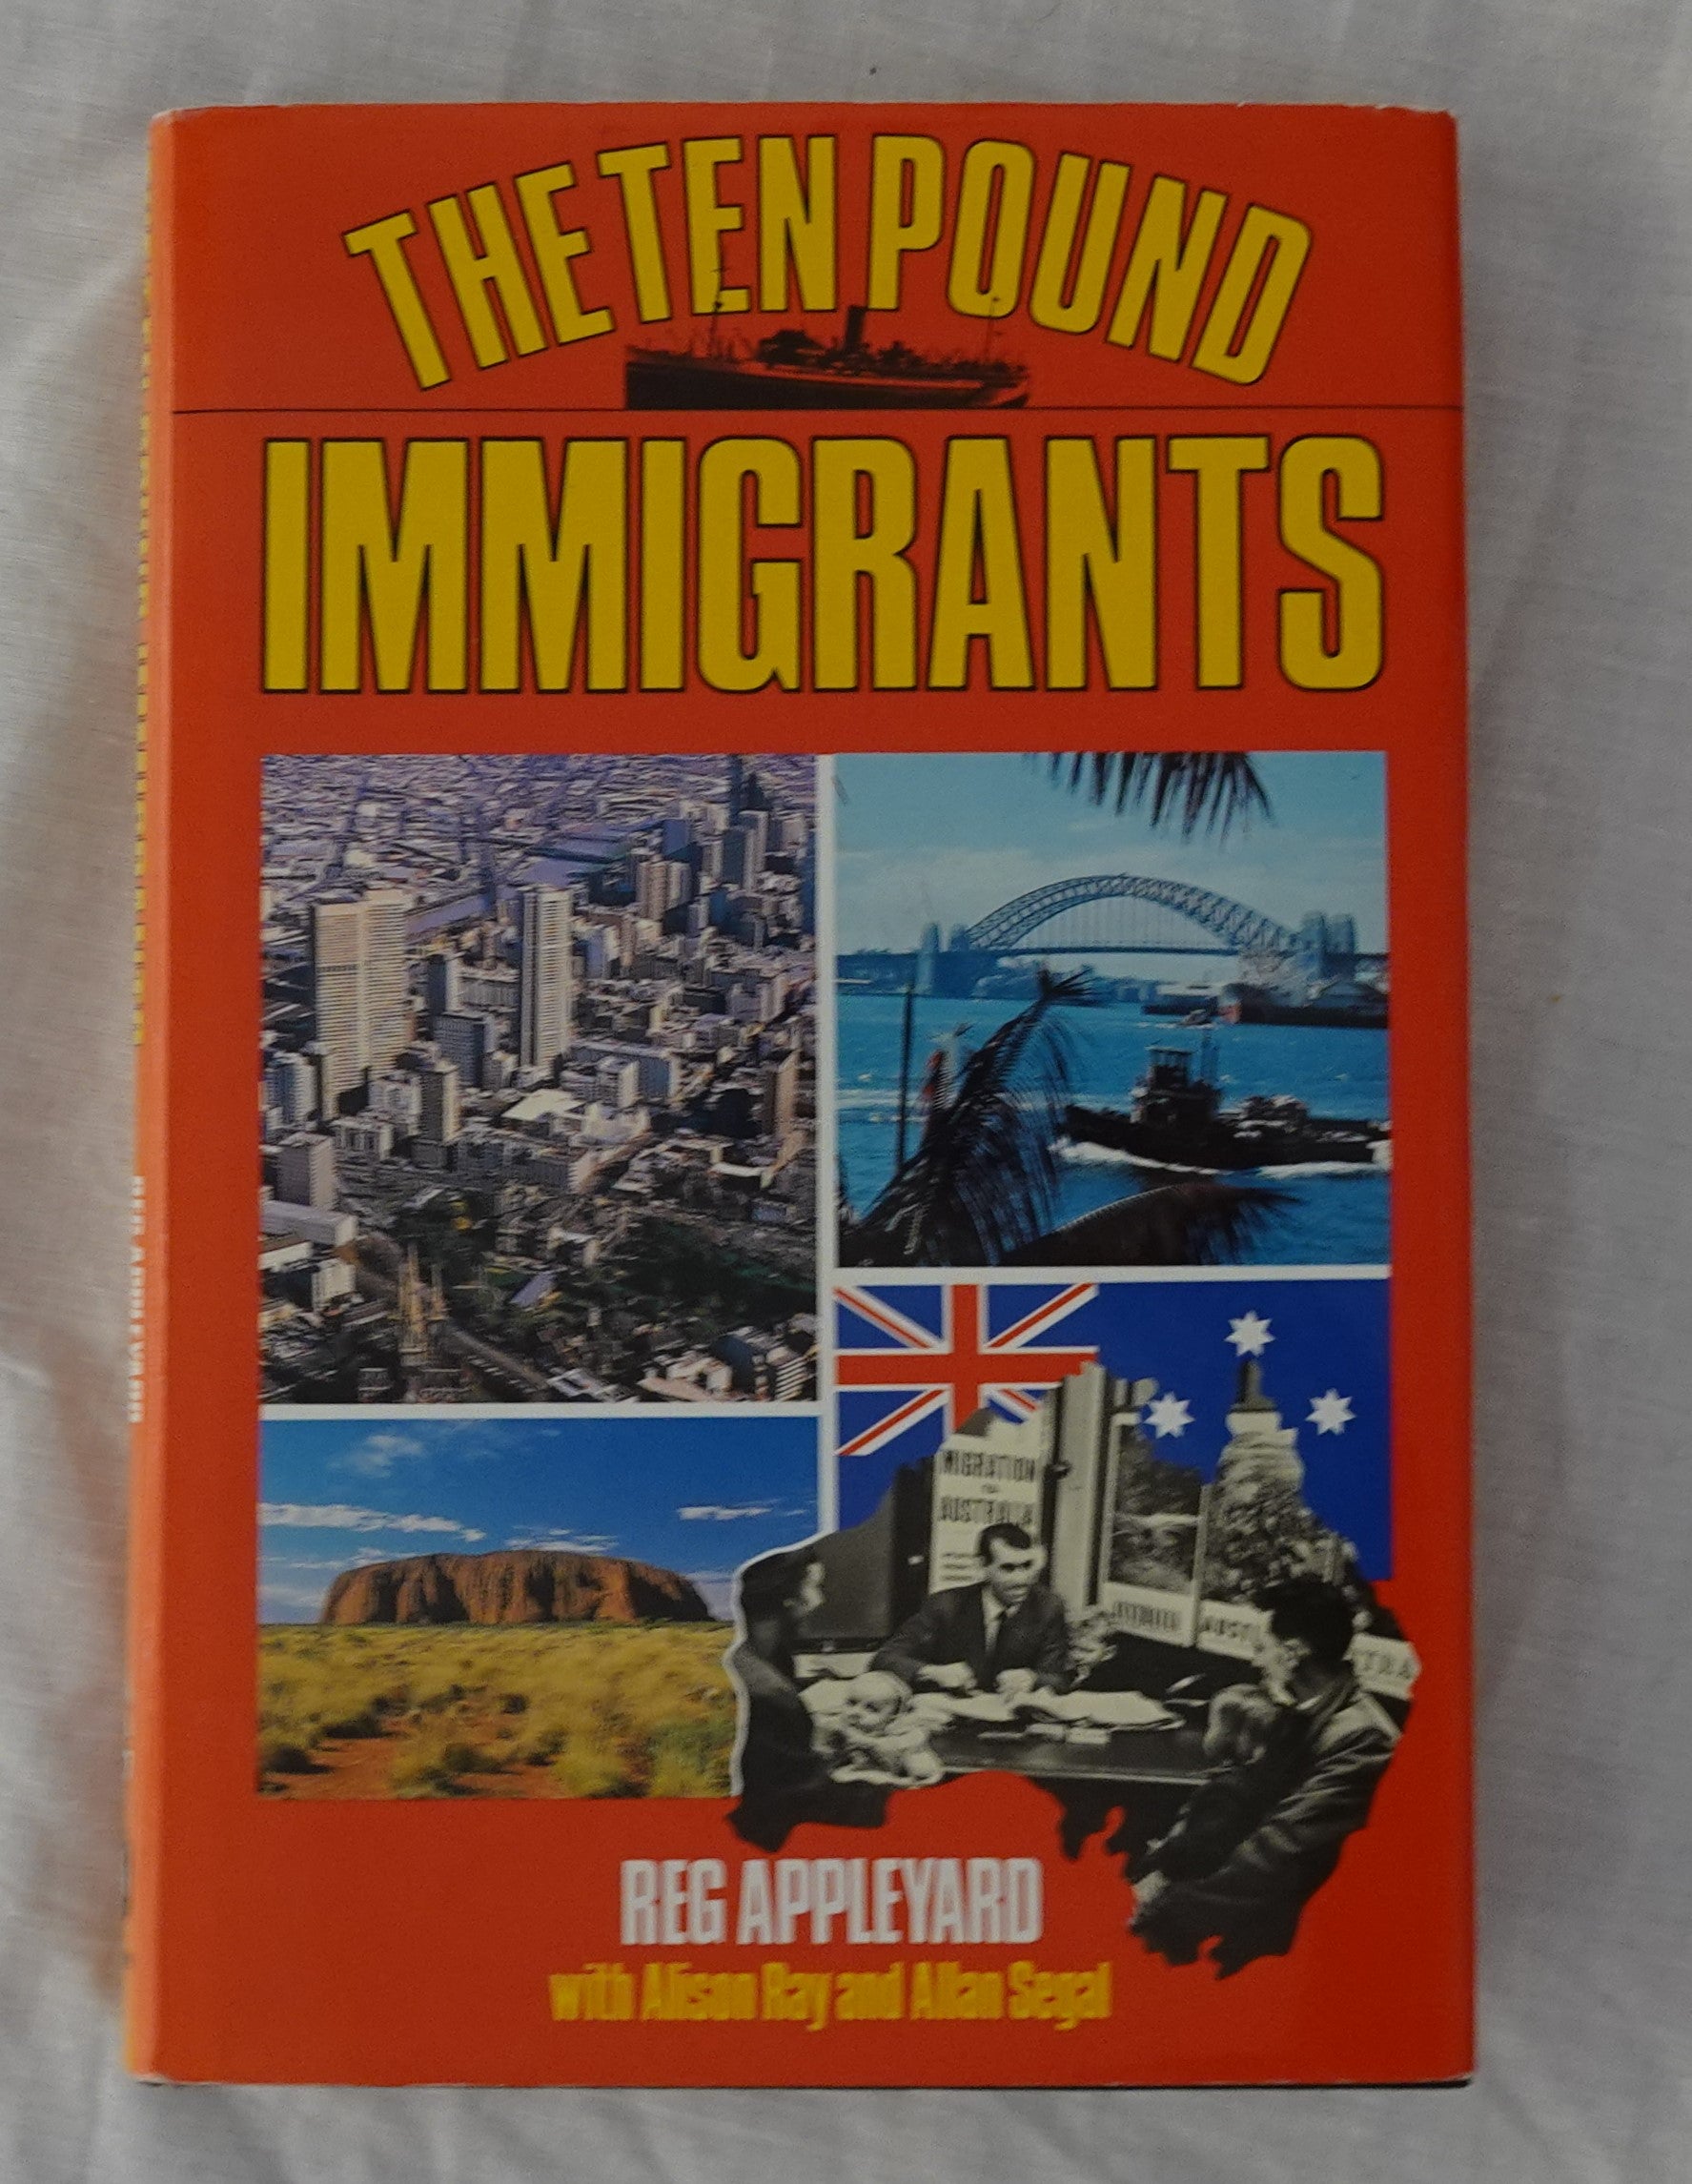 The Ten Pound Immigrants by Reg Appleyard